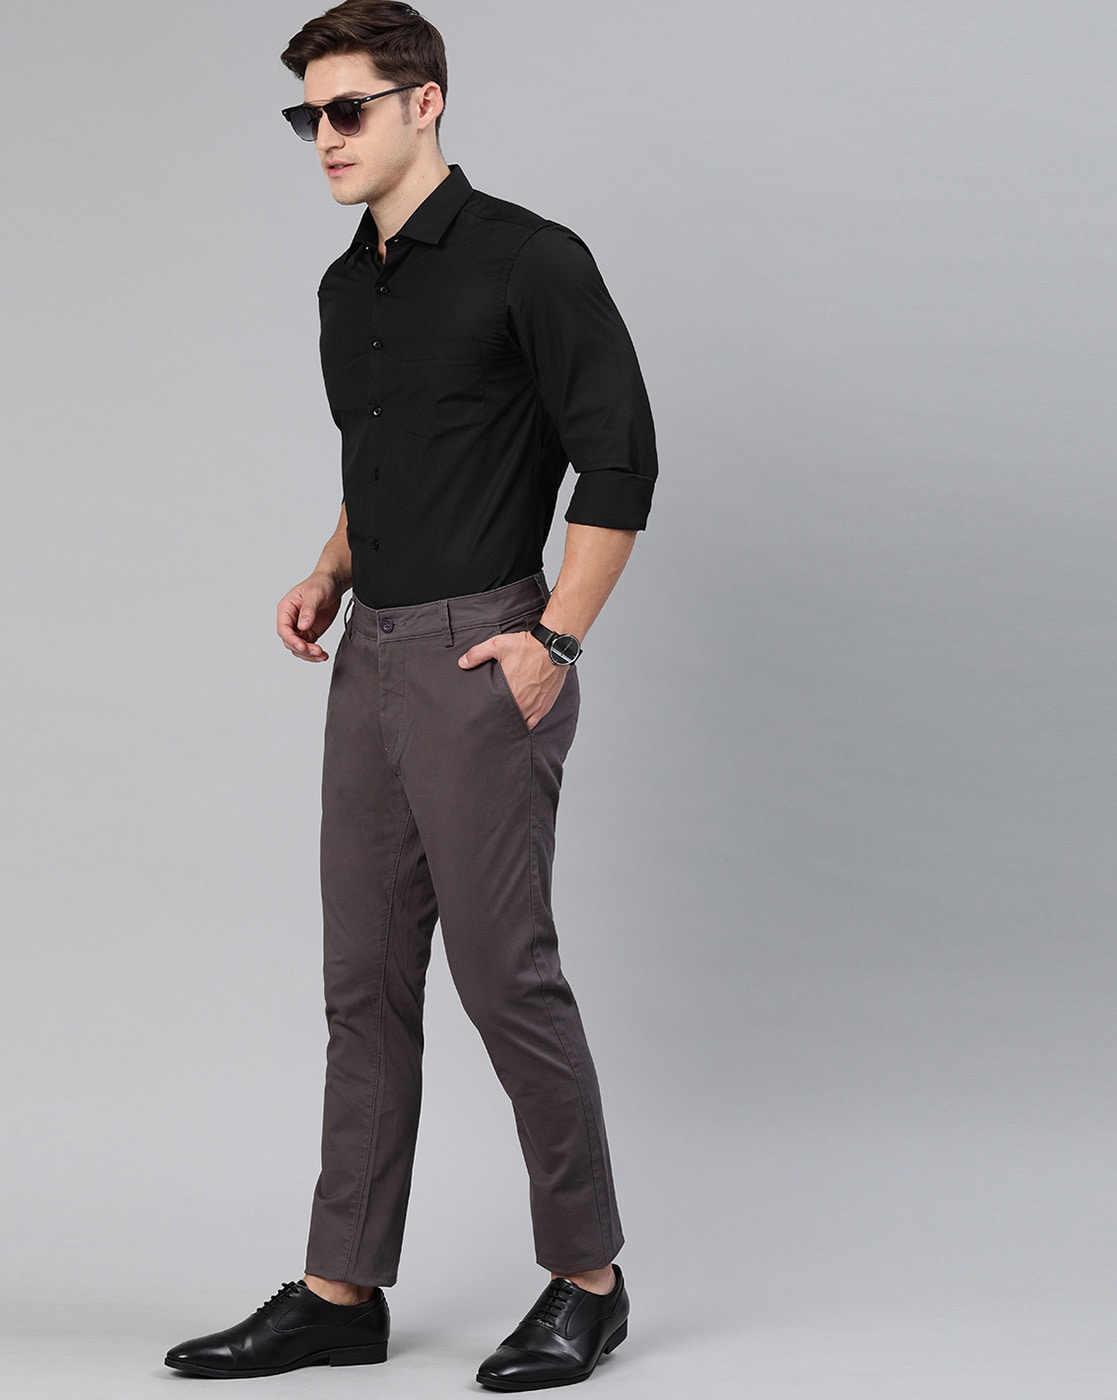 Buy Black Shirts for Men by iVOC Online | Ajio.com